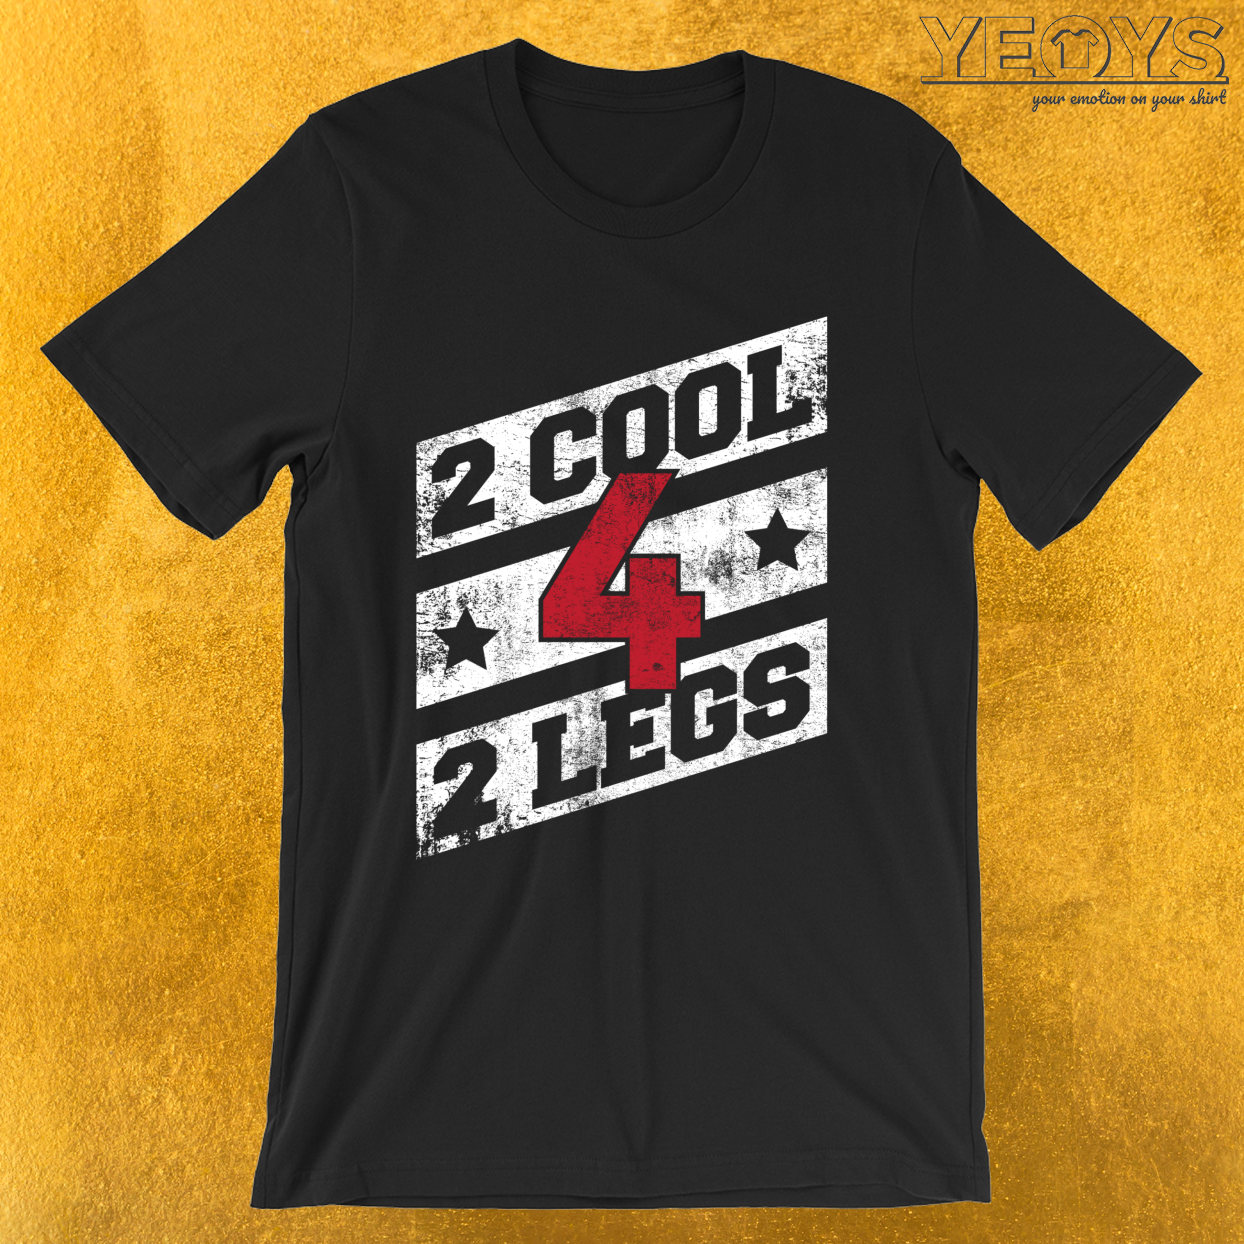 2 Cool 4 2 Legs – Leg Amputee Tee